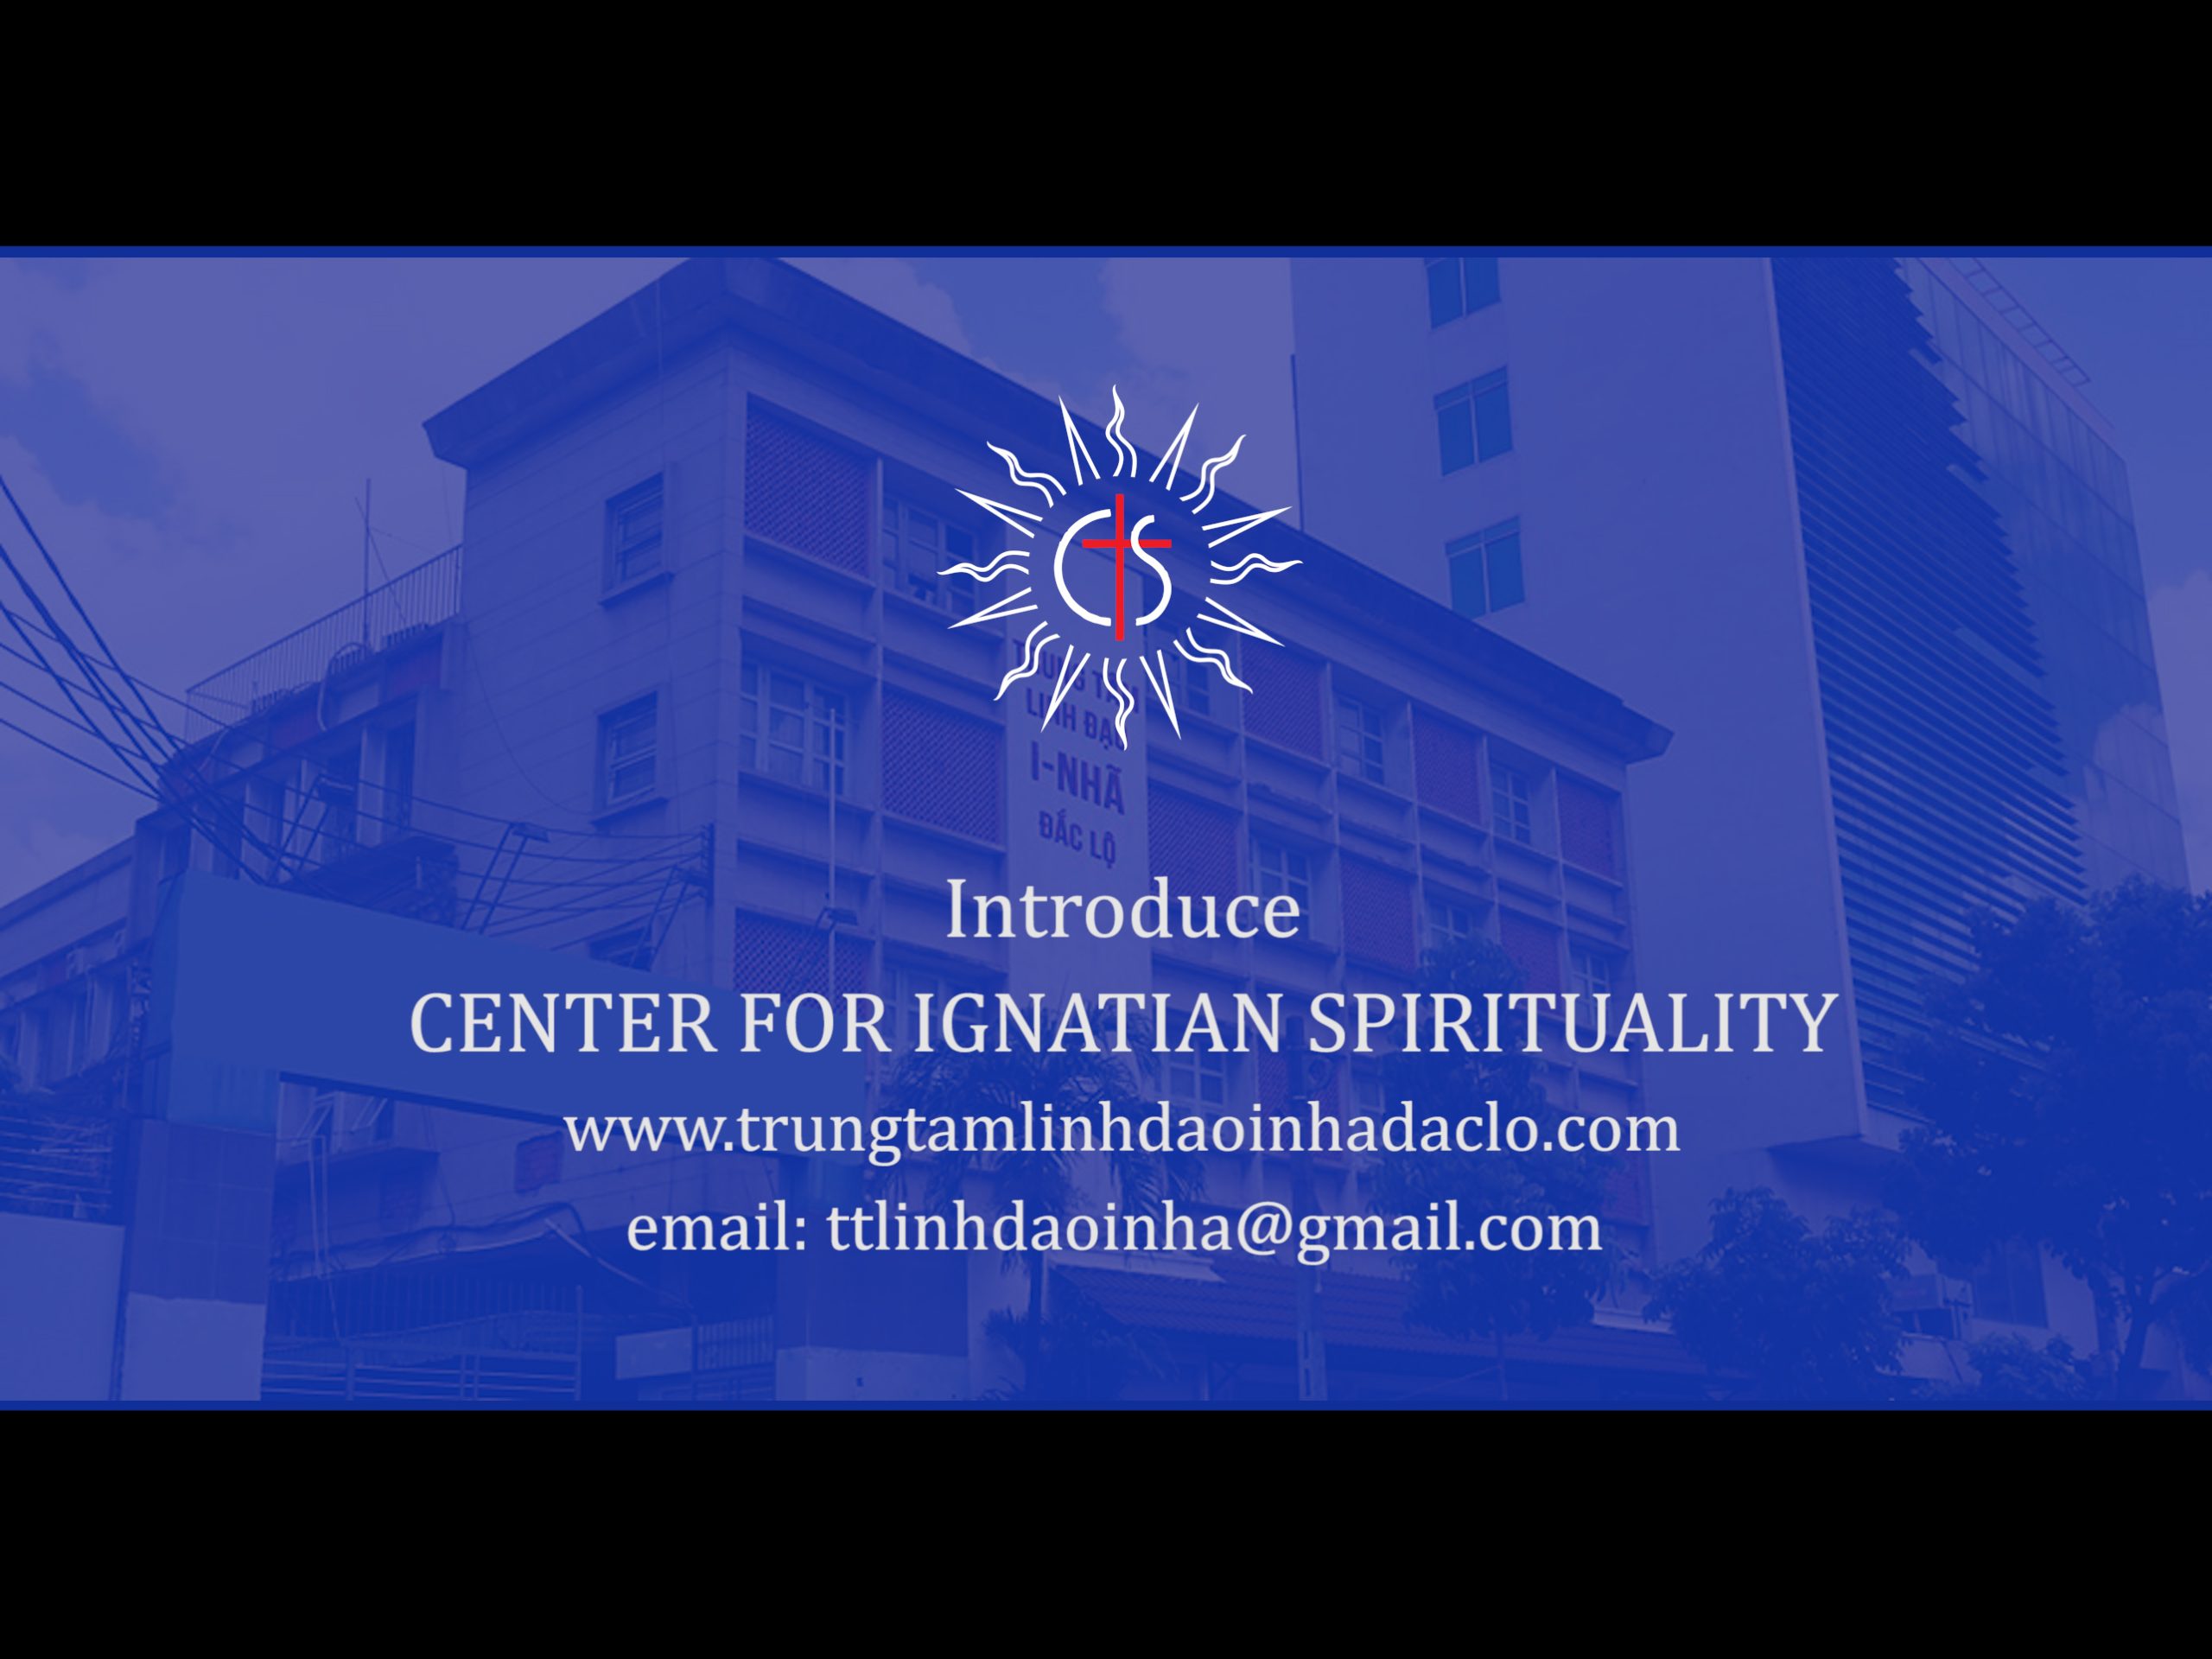 Introduce Center for Ignatian Spirituality